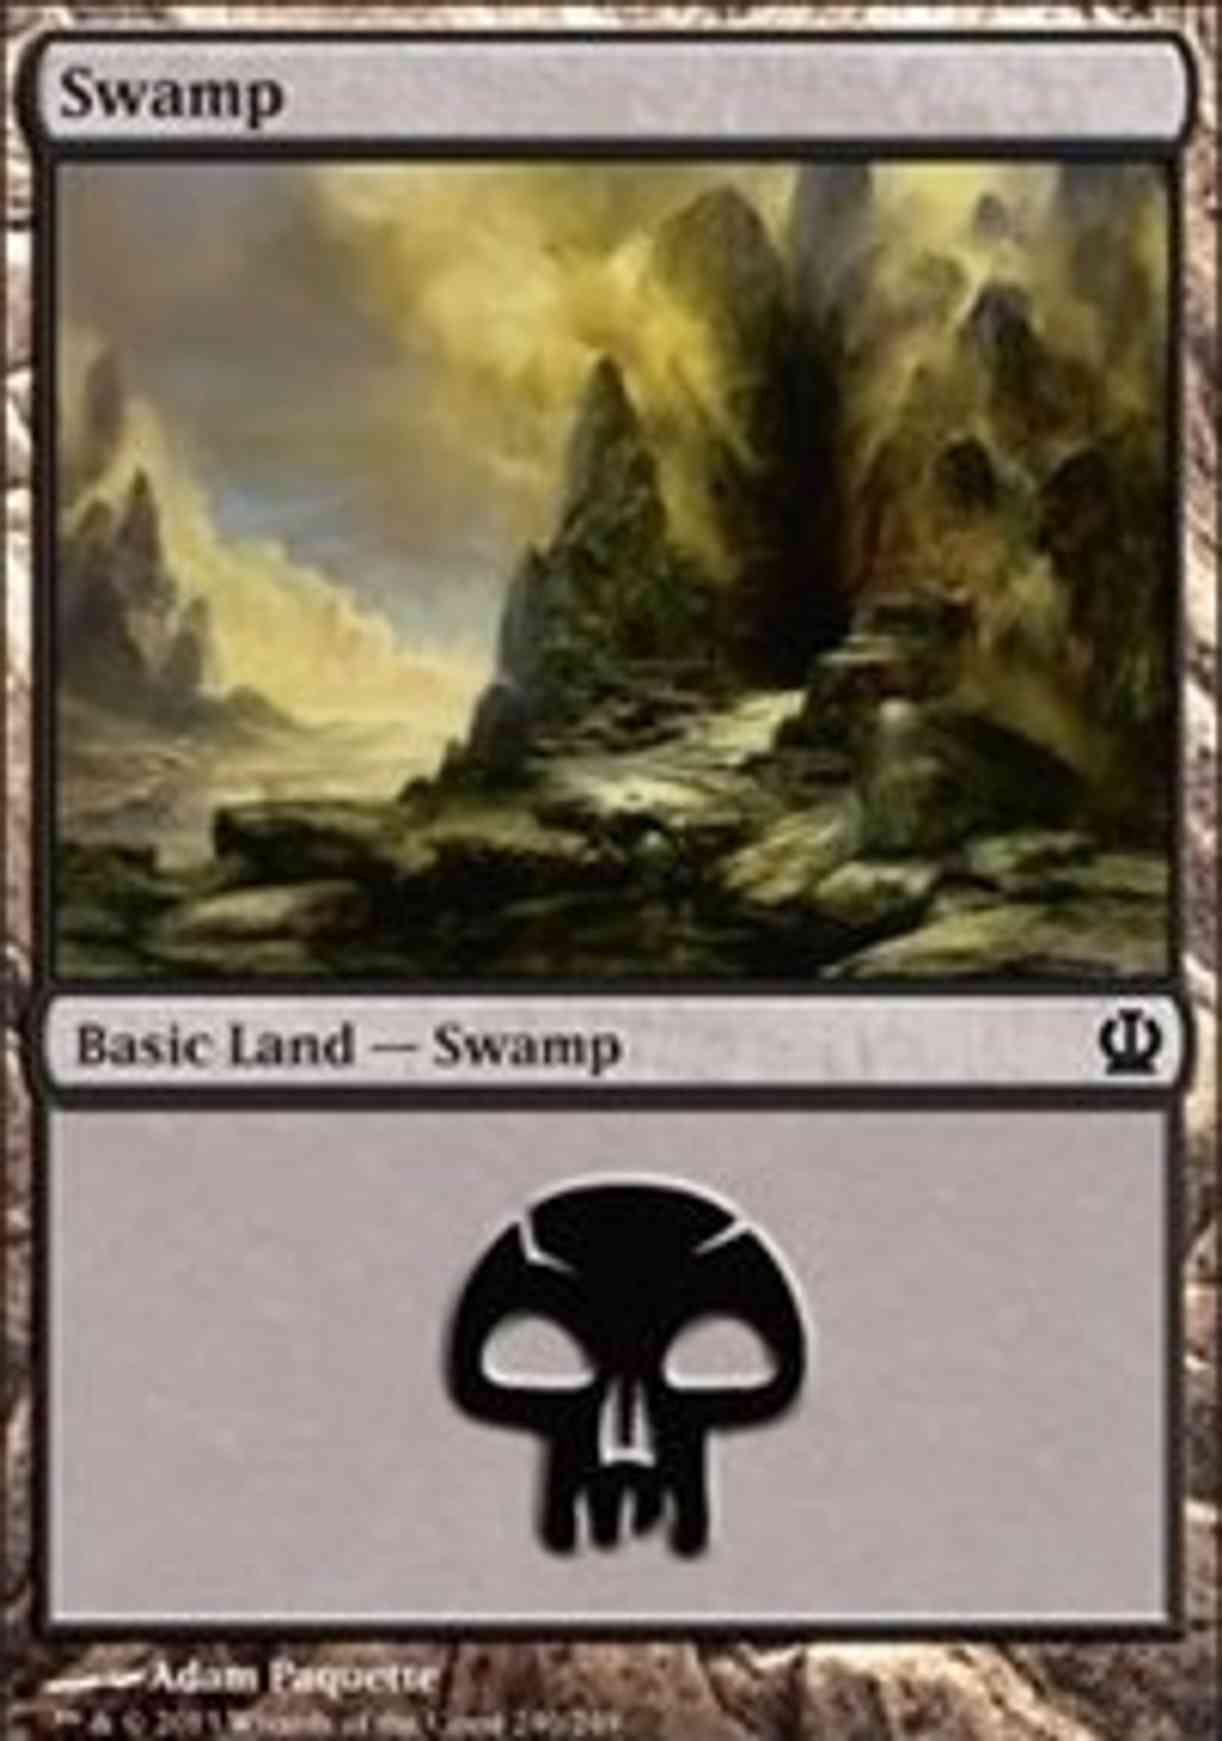 Swamp (240) magic card front